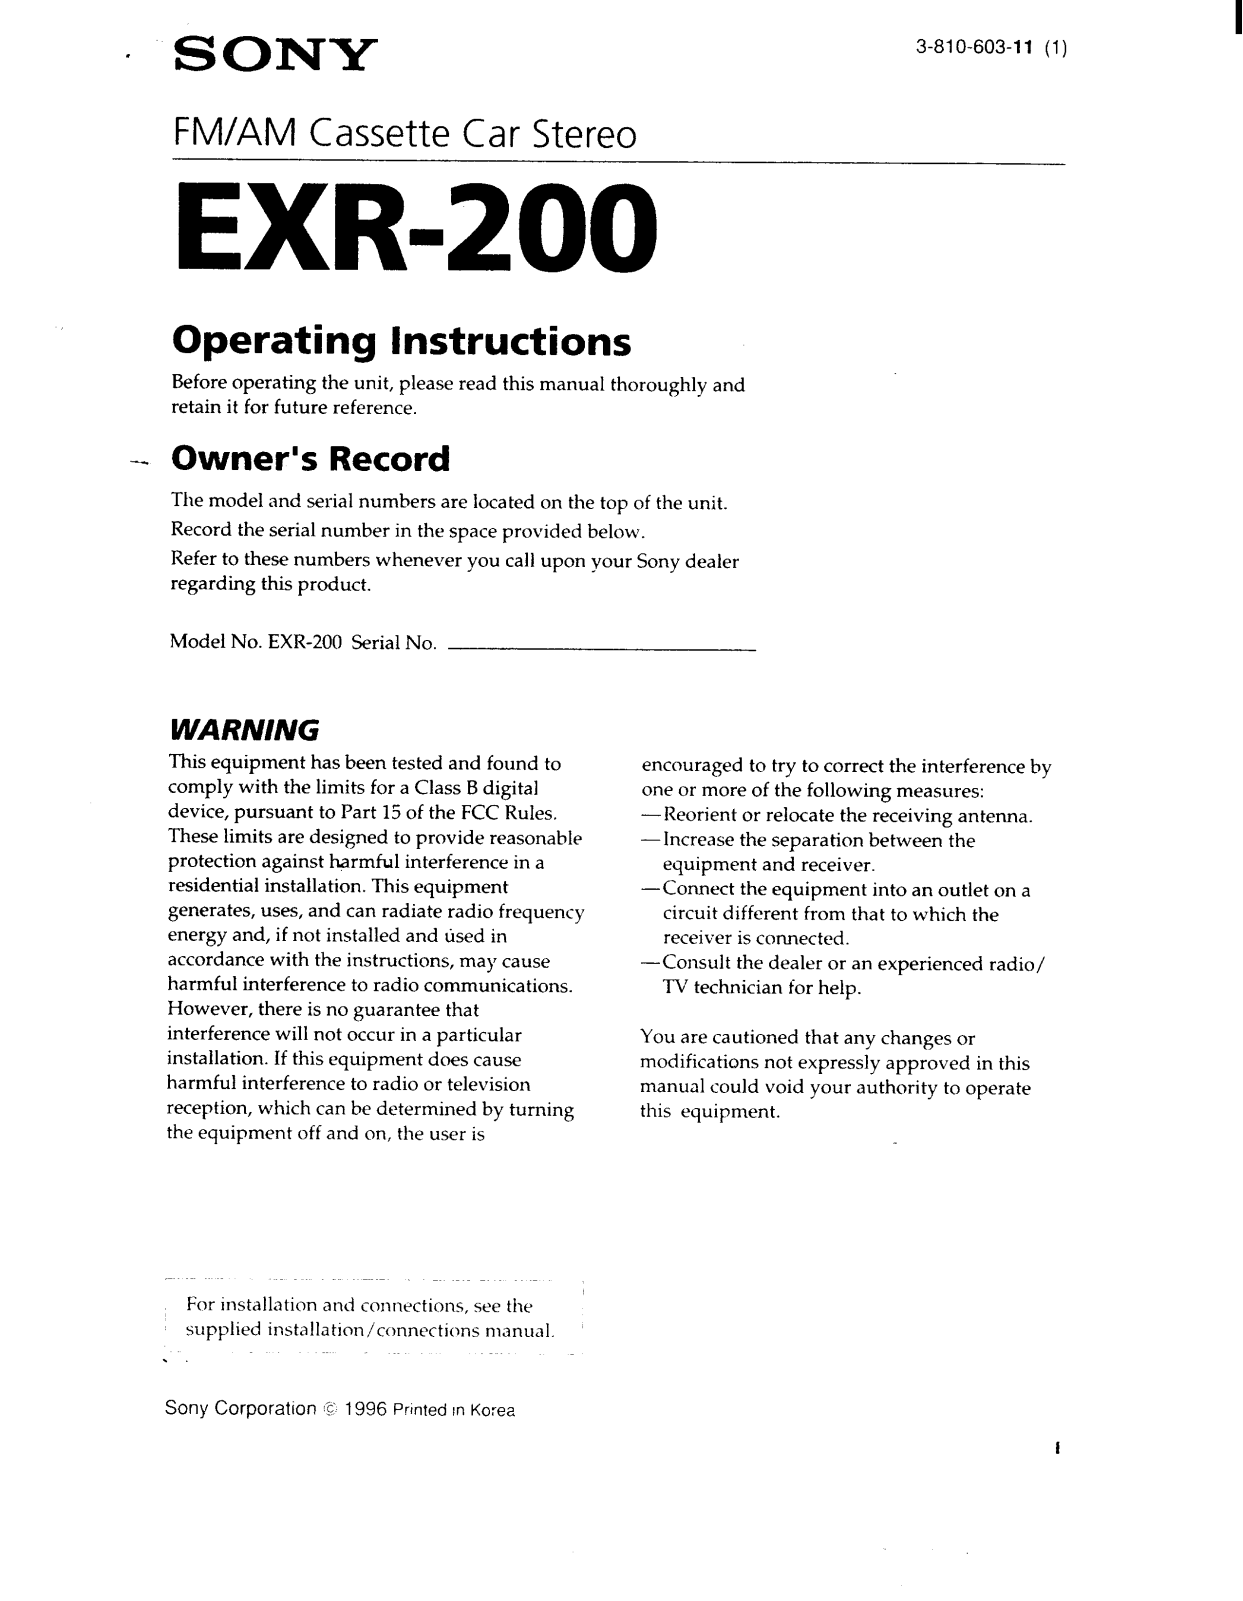 Sony EXR-200 Operating Manual